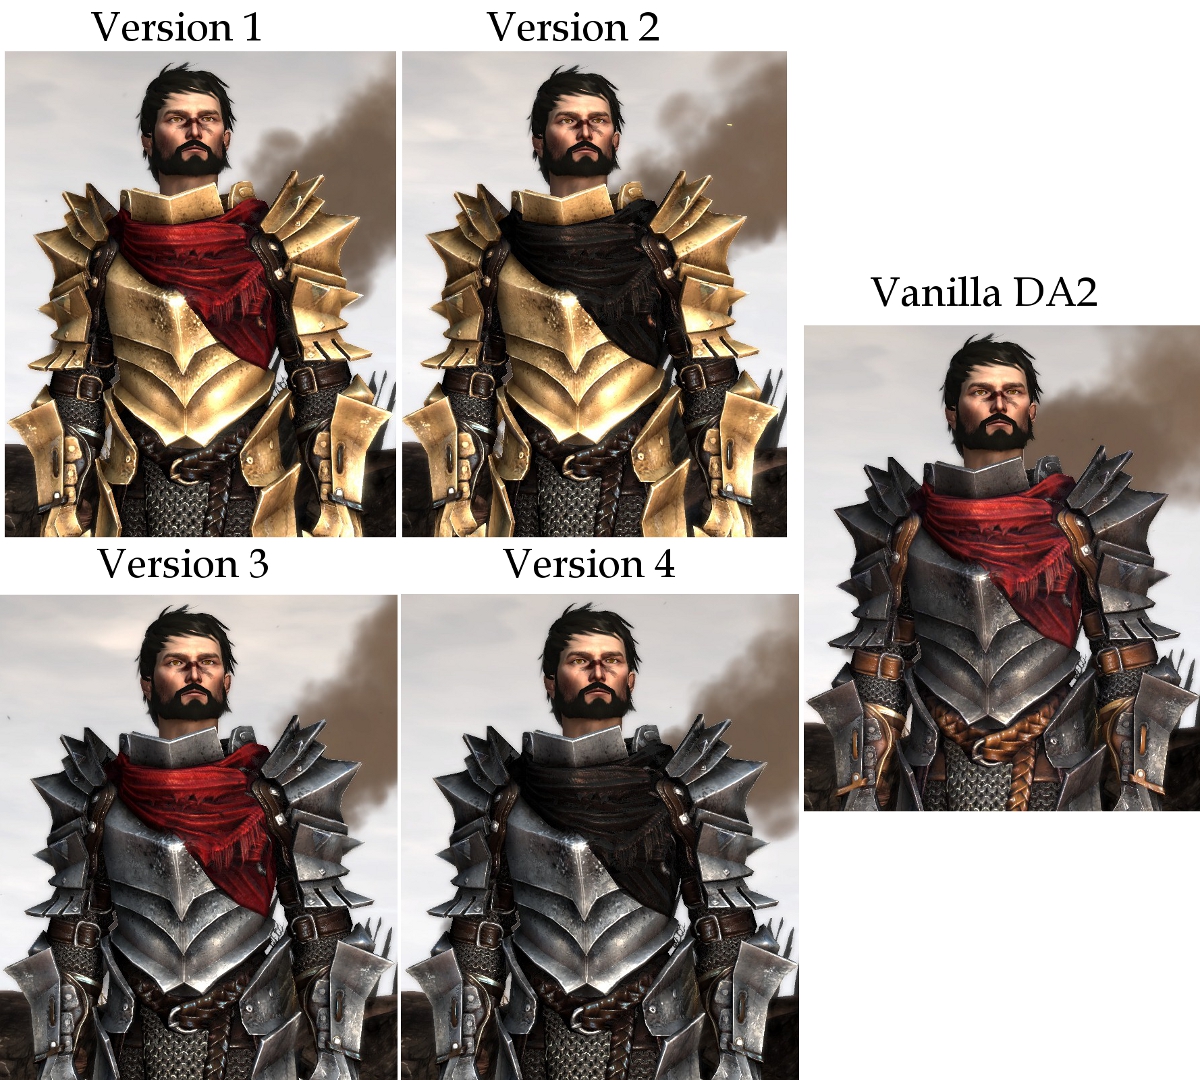 Dragon age 2 armor upgrade locations